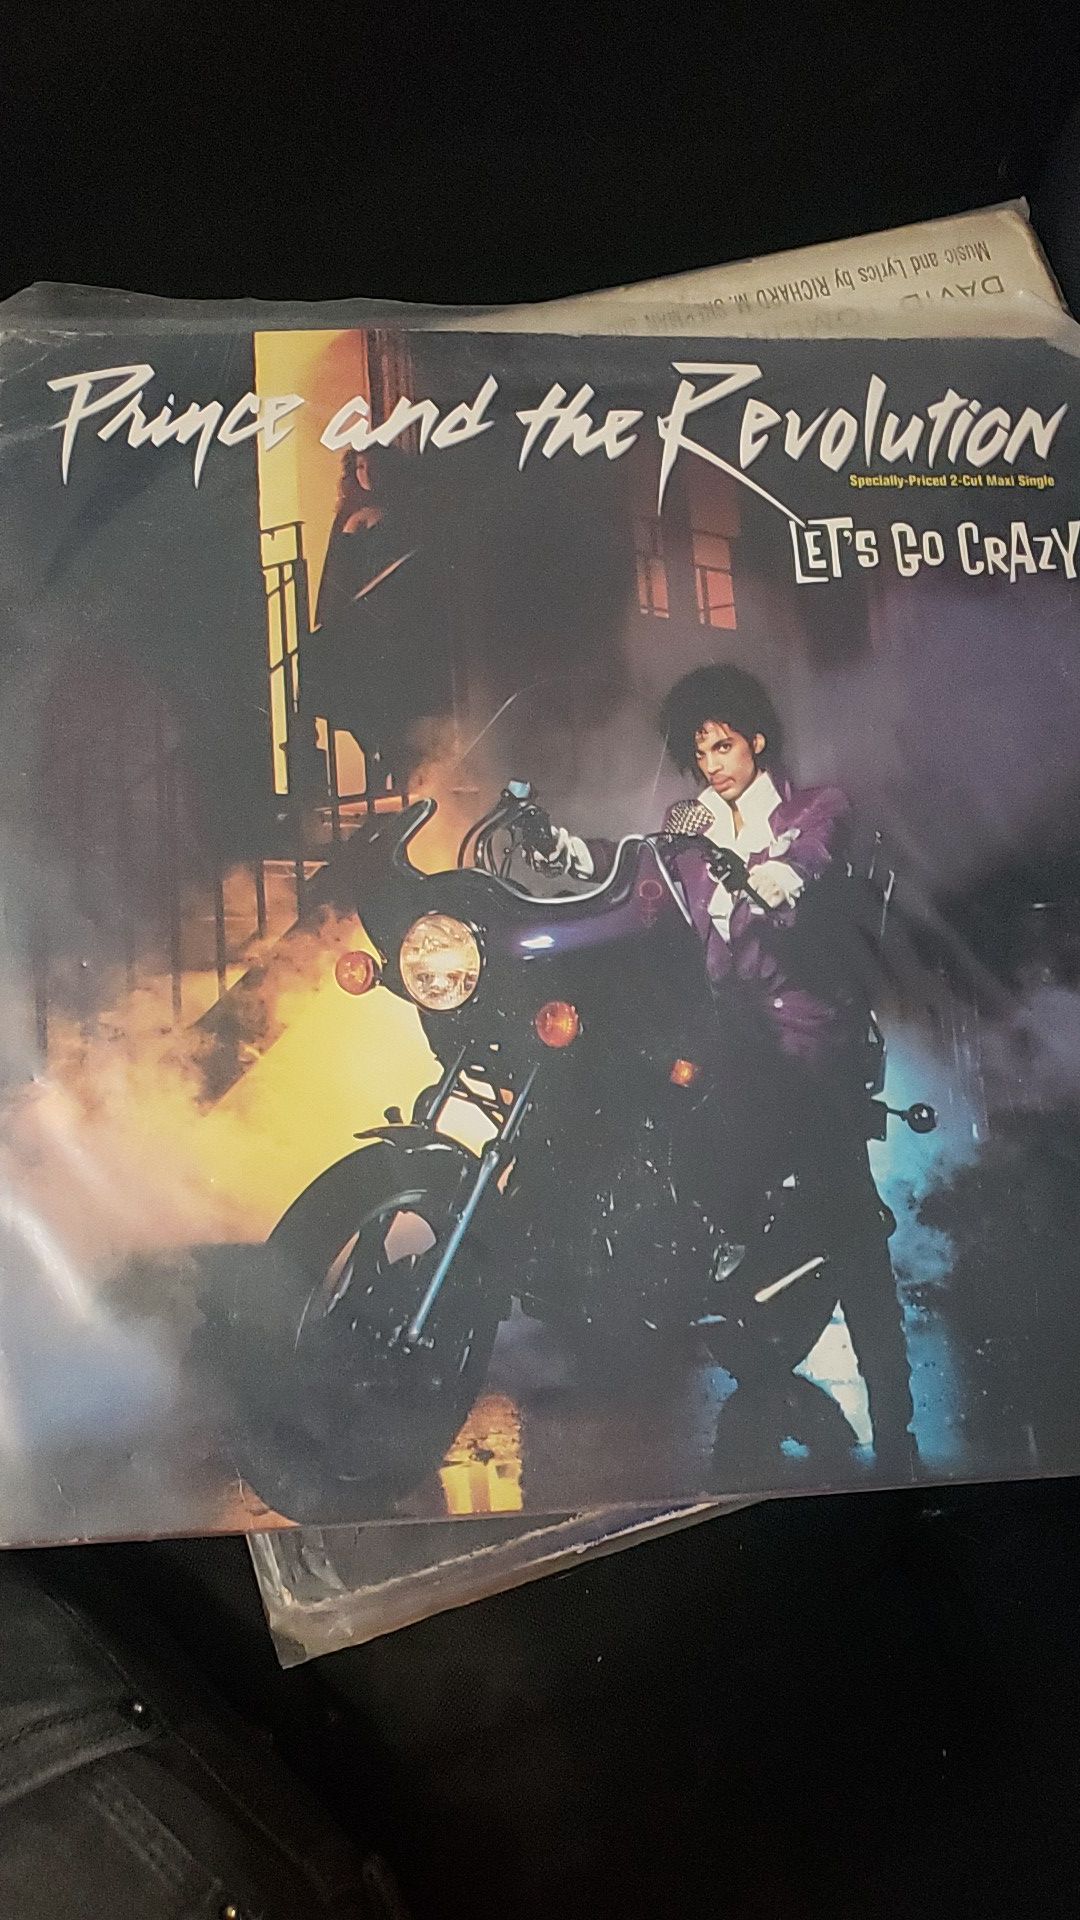 Prince and Revolution let's go crazy